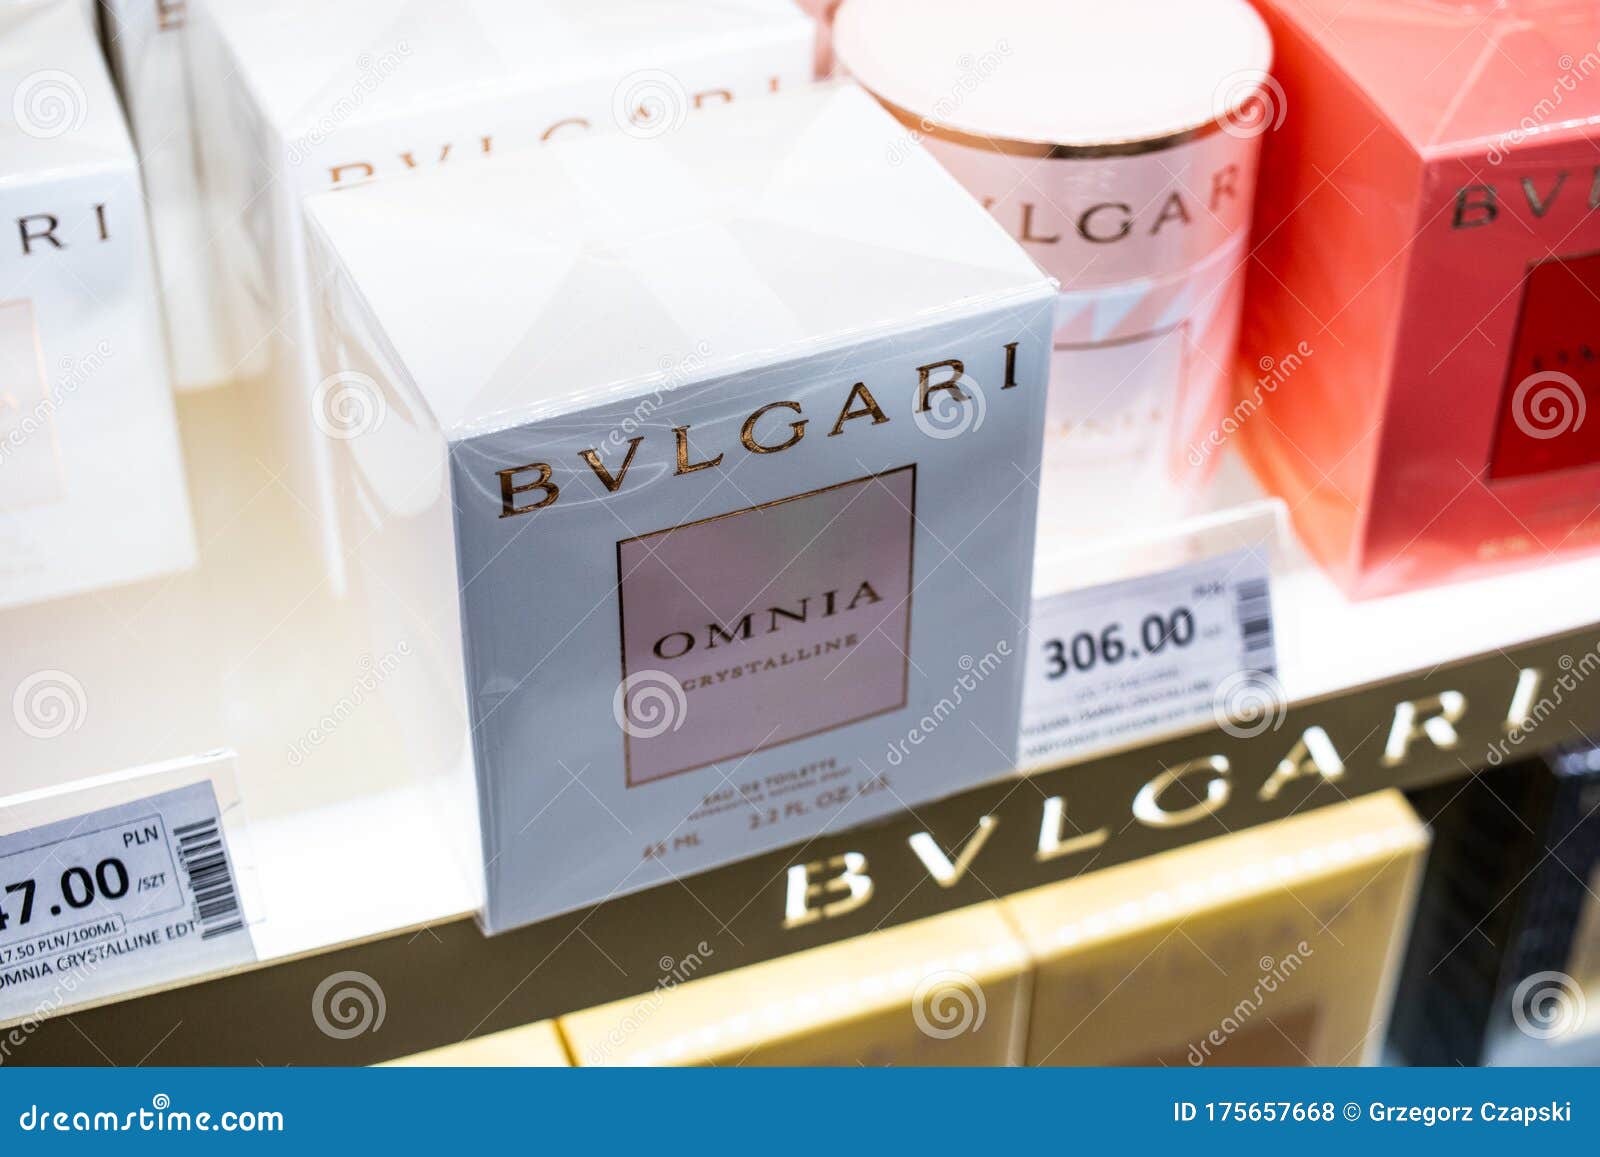 bvlgari perfume sale